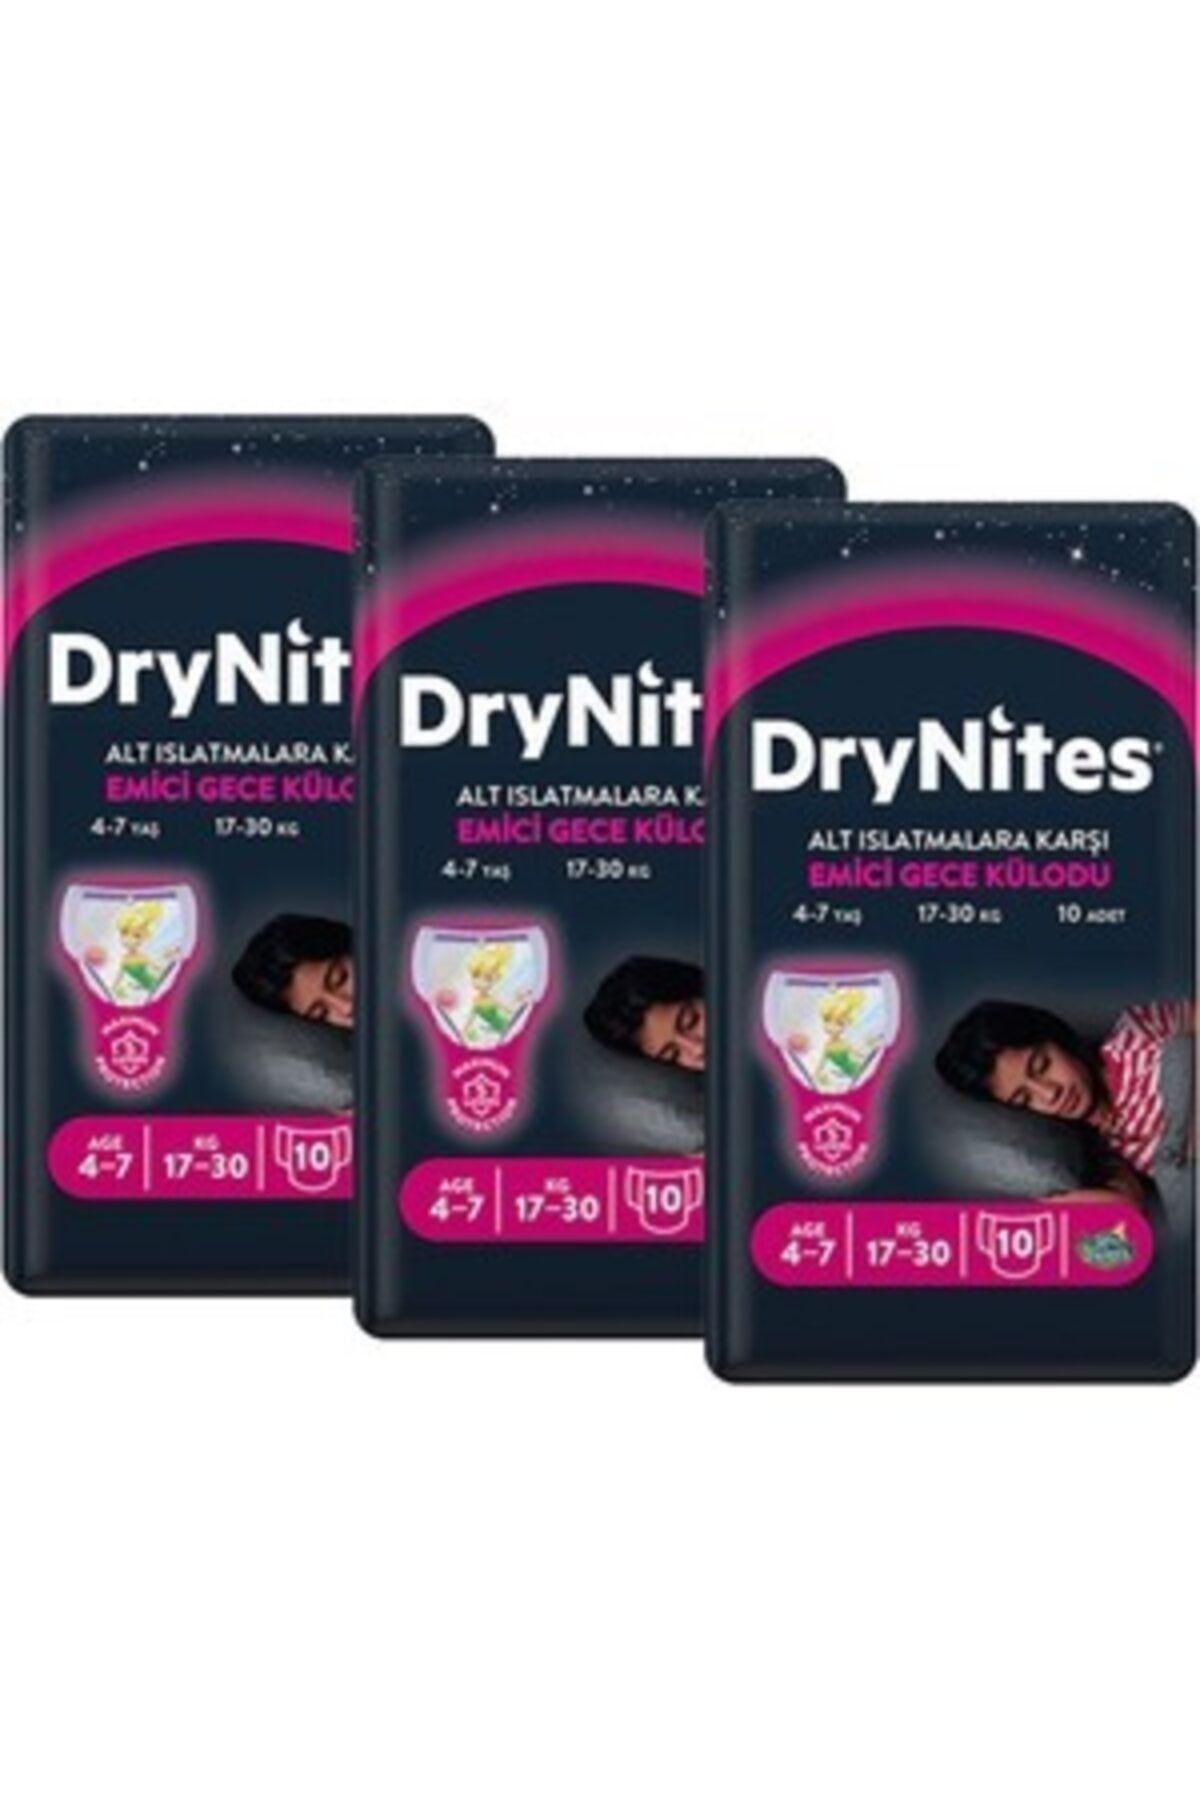 DryNites Kız Gece Emici Külodu 4-7 Yaş 3paket * 30 Adet